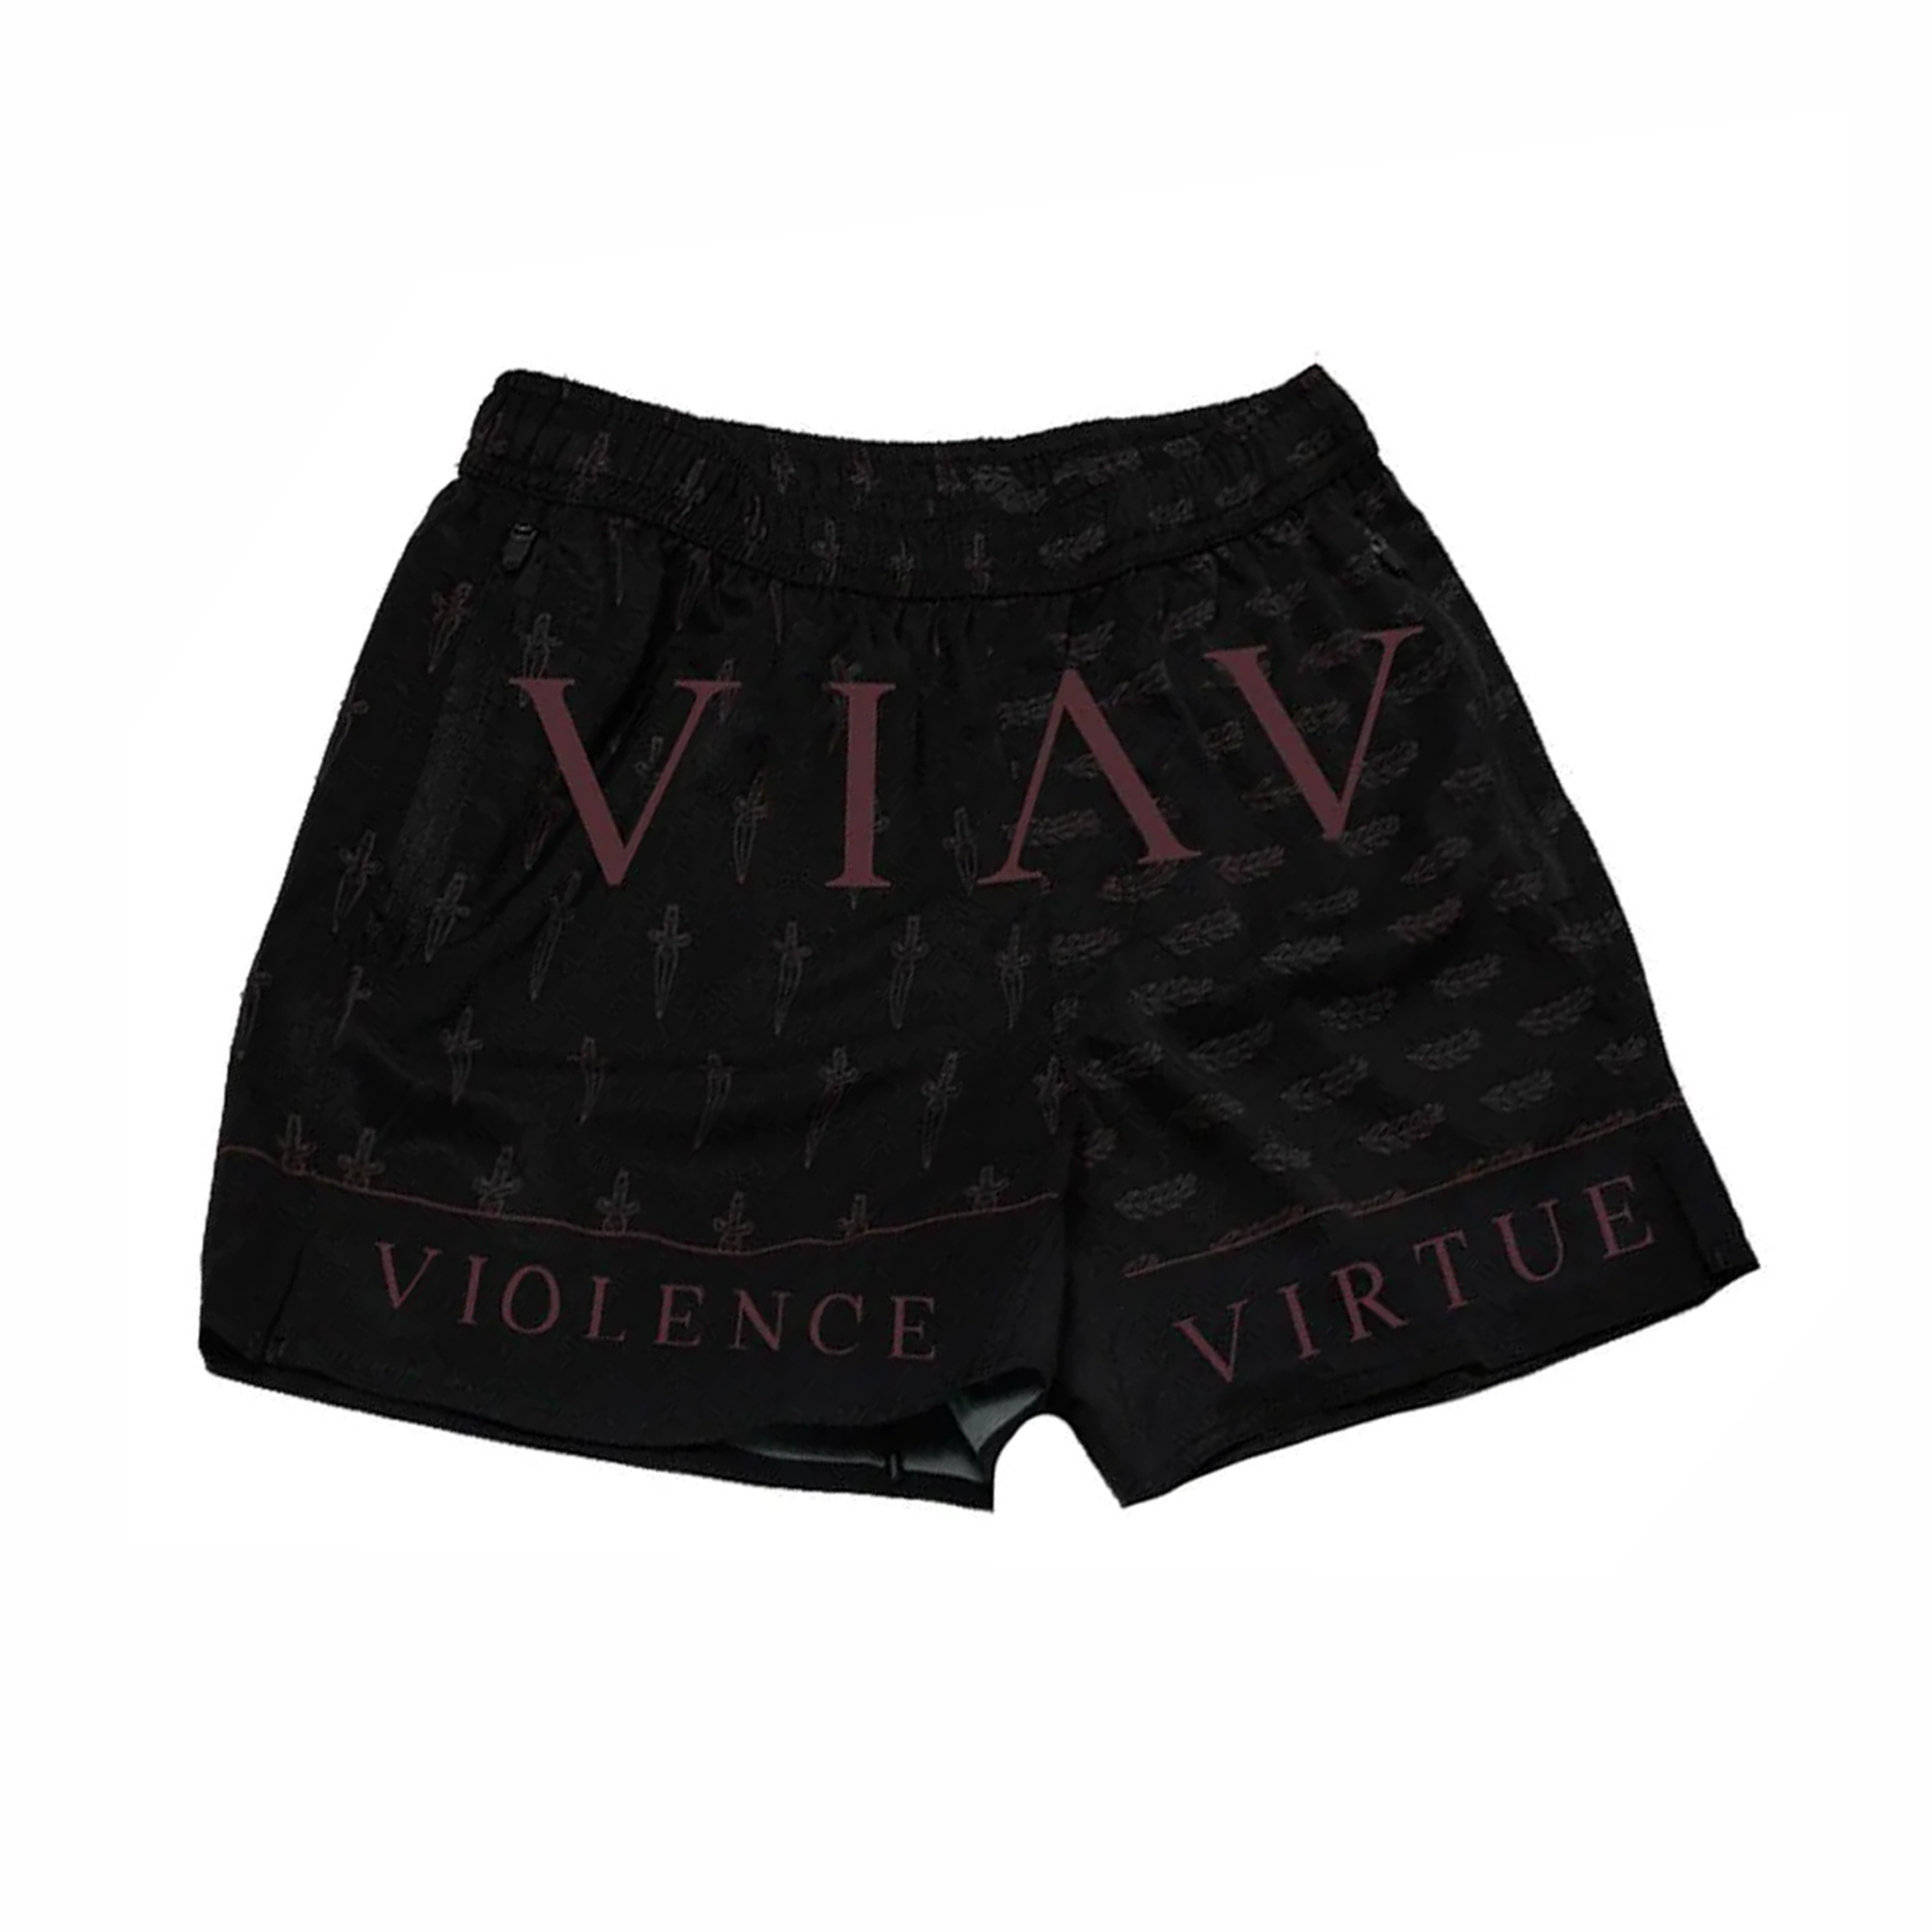 VIAV Tech Shorts